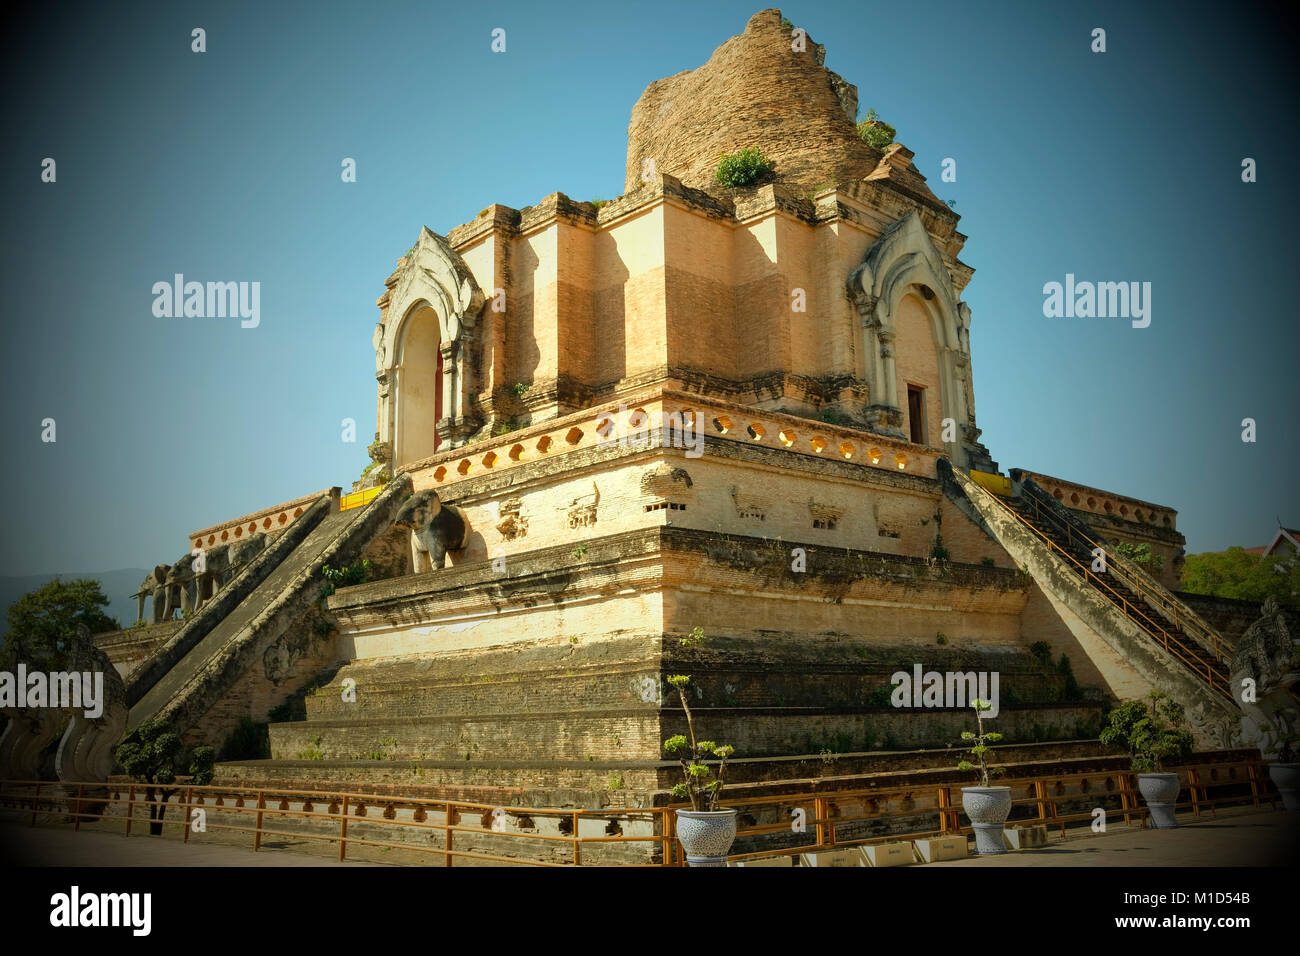 The ancient stupa at Wat Chedi Luang in Chiang Mai, Thailand. 24-Jan-2018 Stock Photo